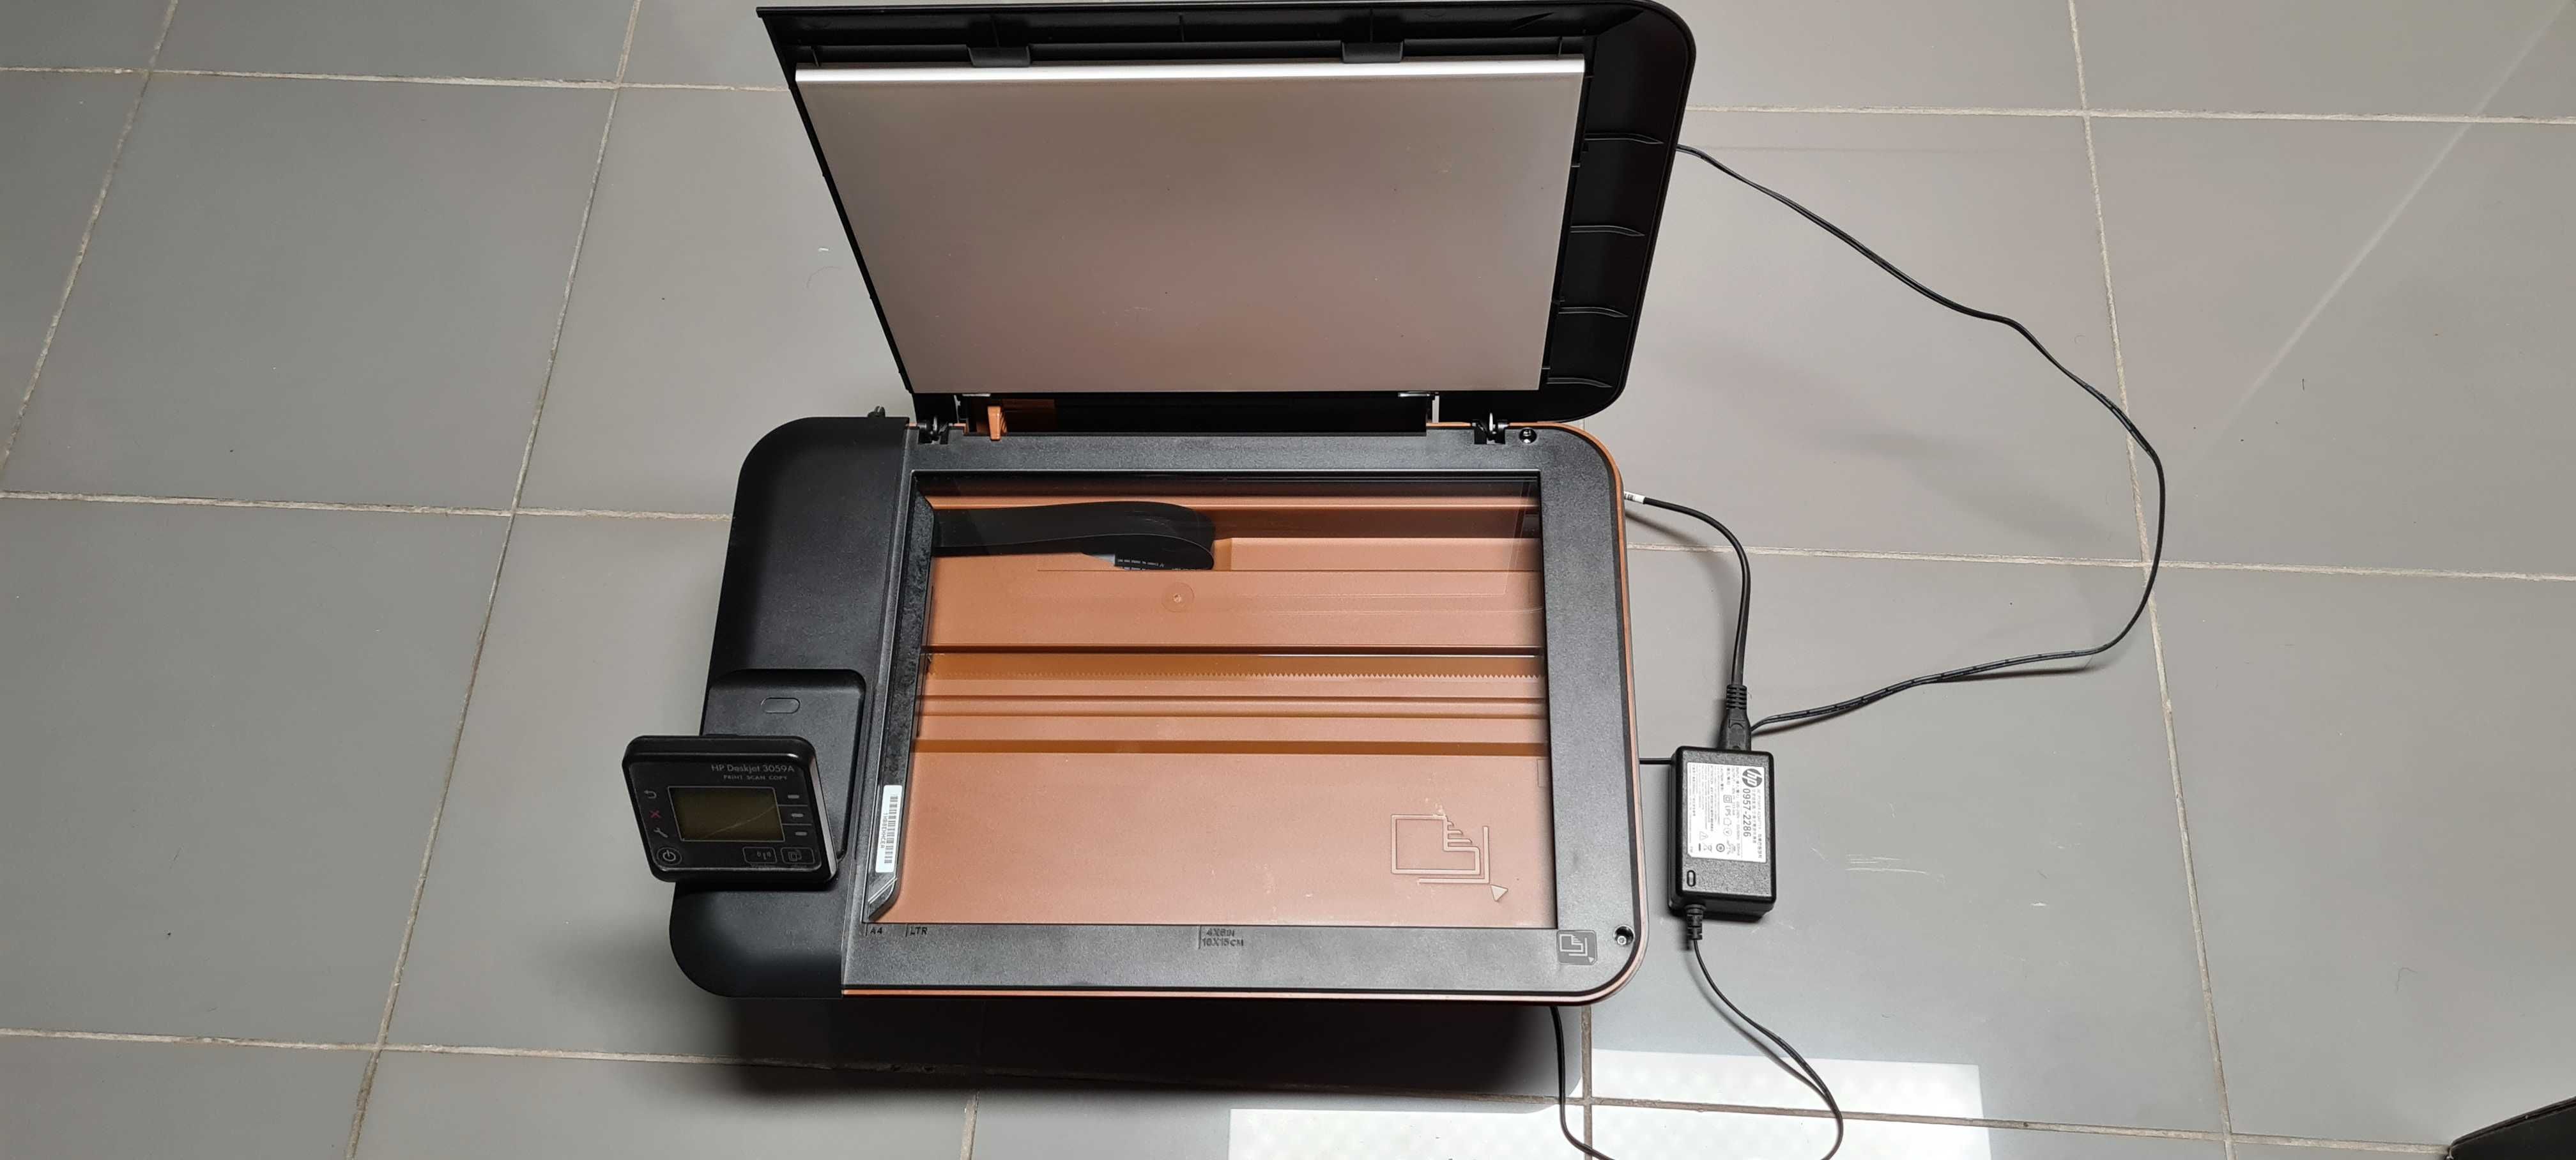 Impressora HP Deskjet 3059A